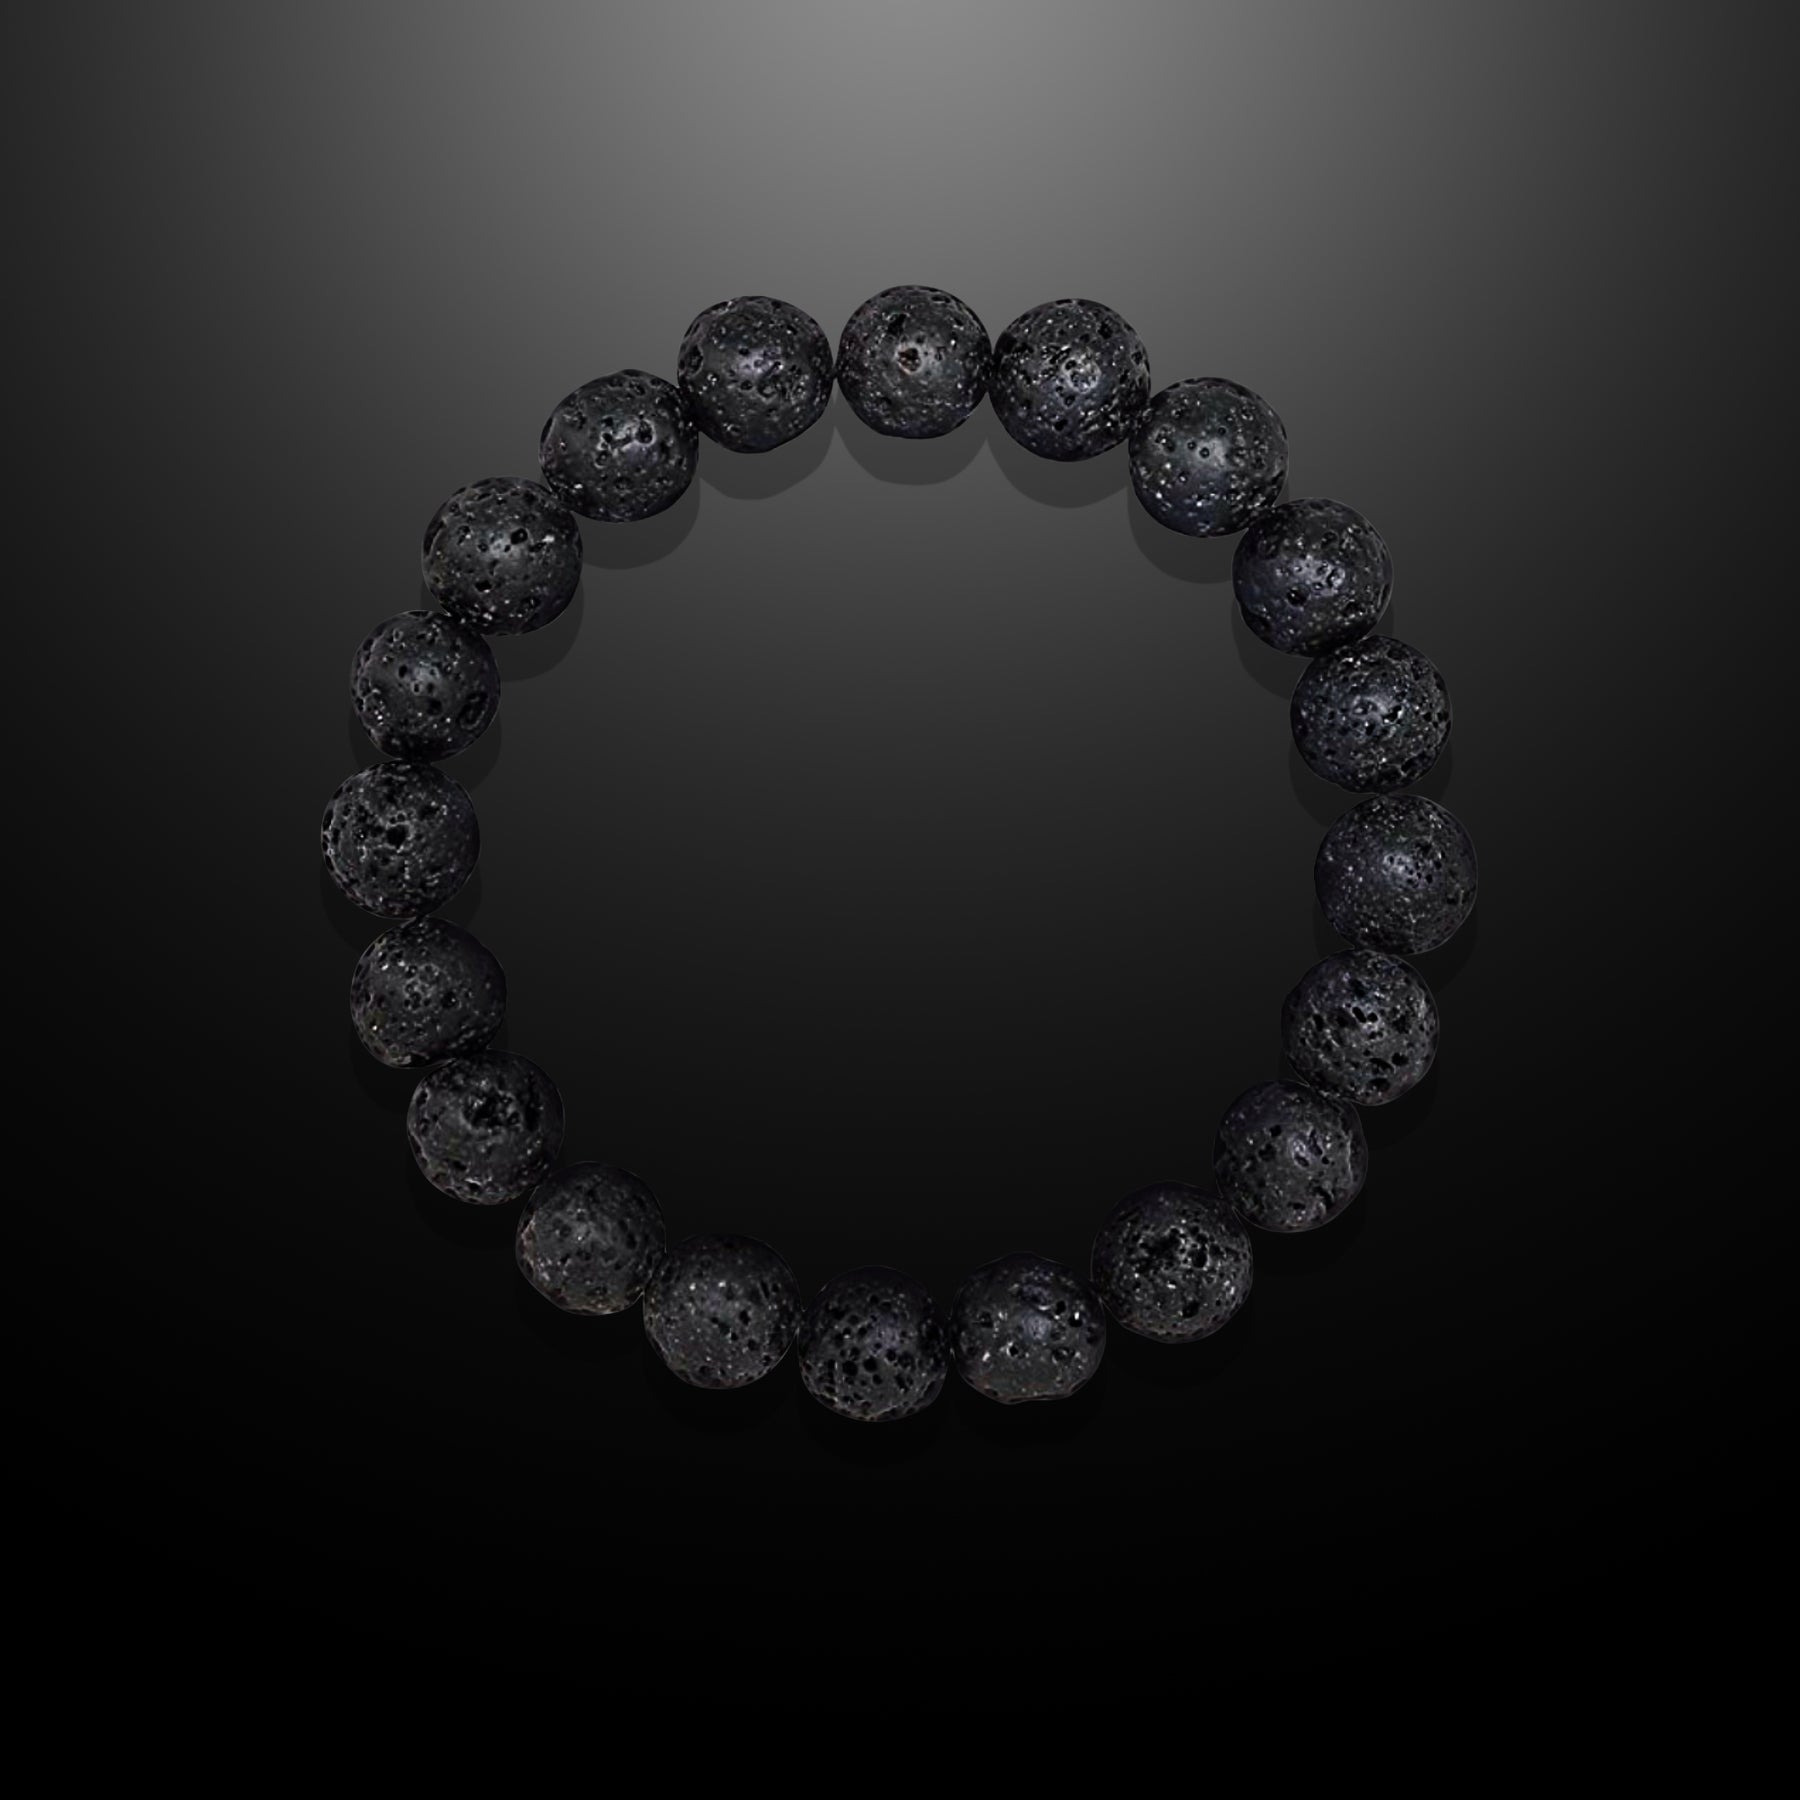 Lava Rock Men Beaded Bracelet 10mm with Sapphire Blue Glass Beads